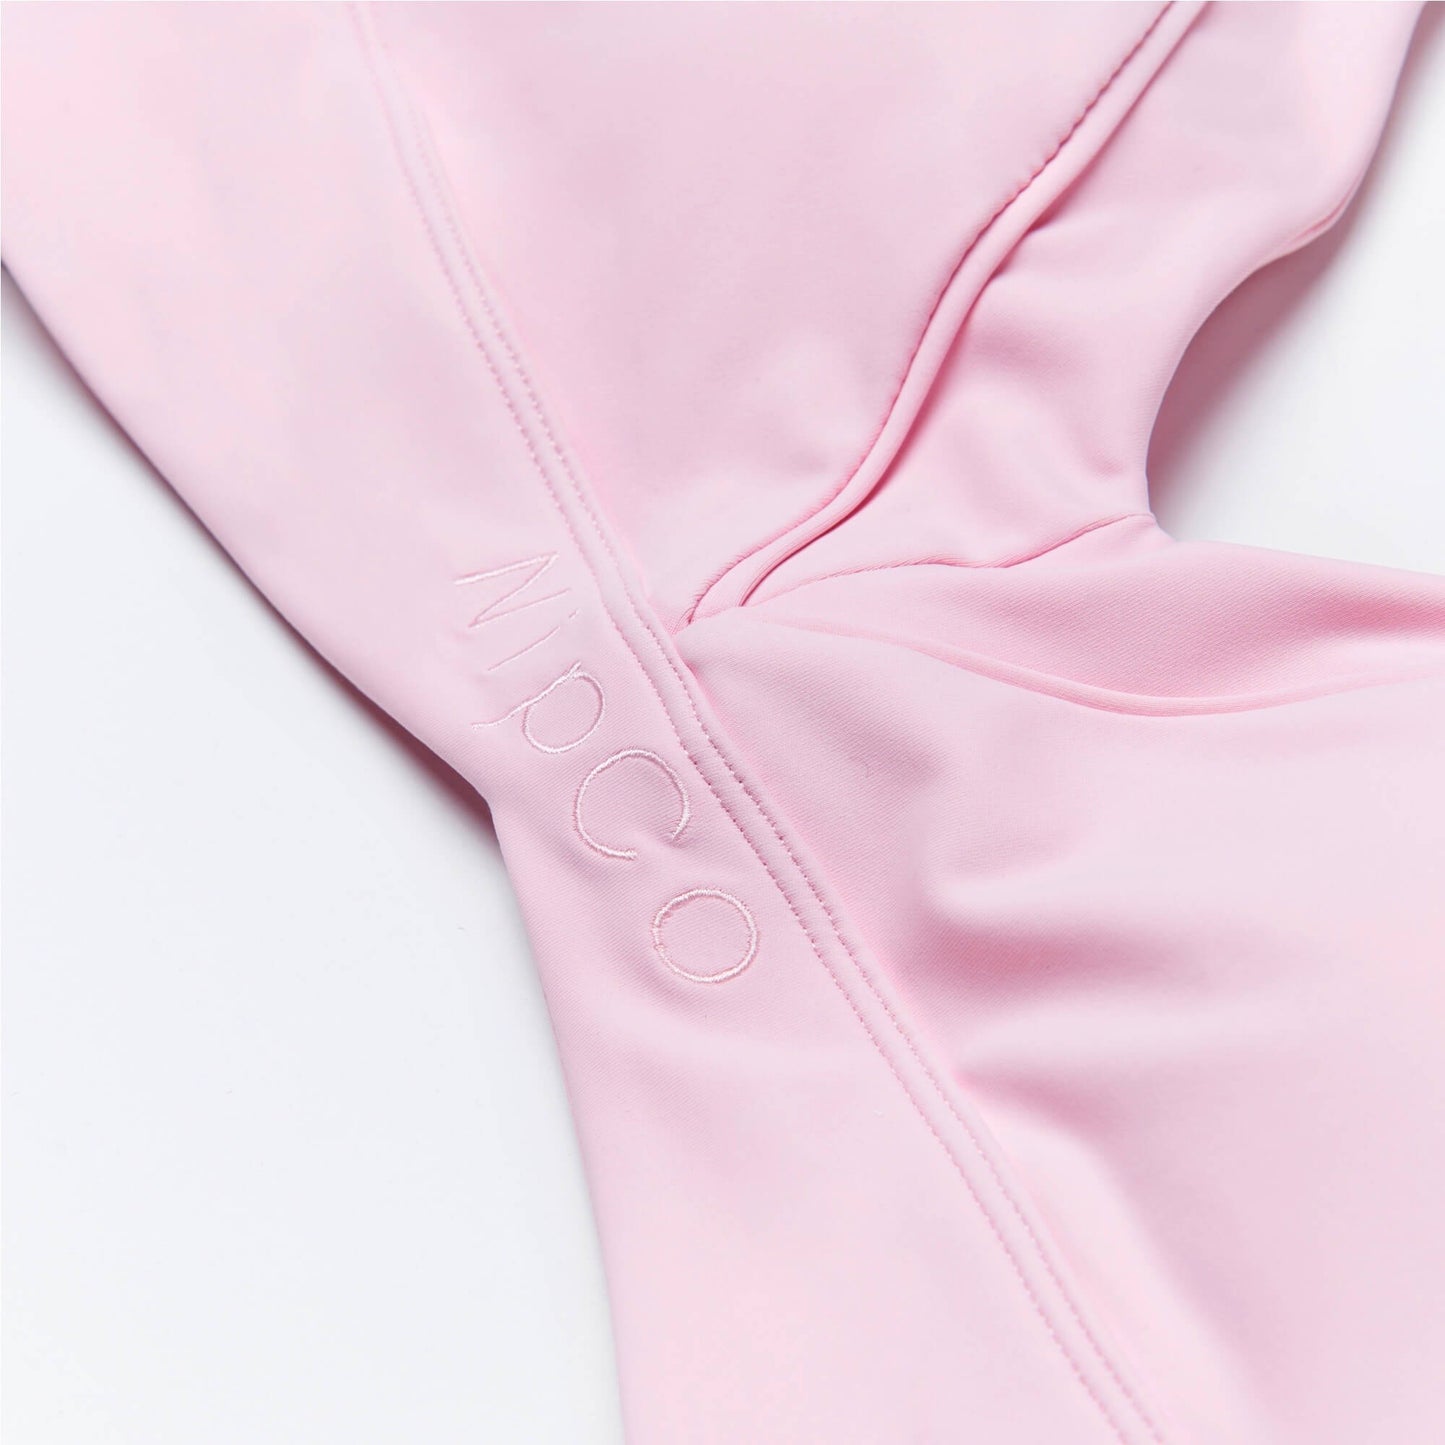 NipCo - The OG Bra - A supportive and second skin maternity bra – NipCo.